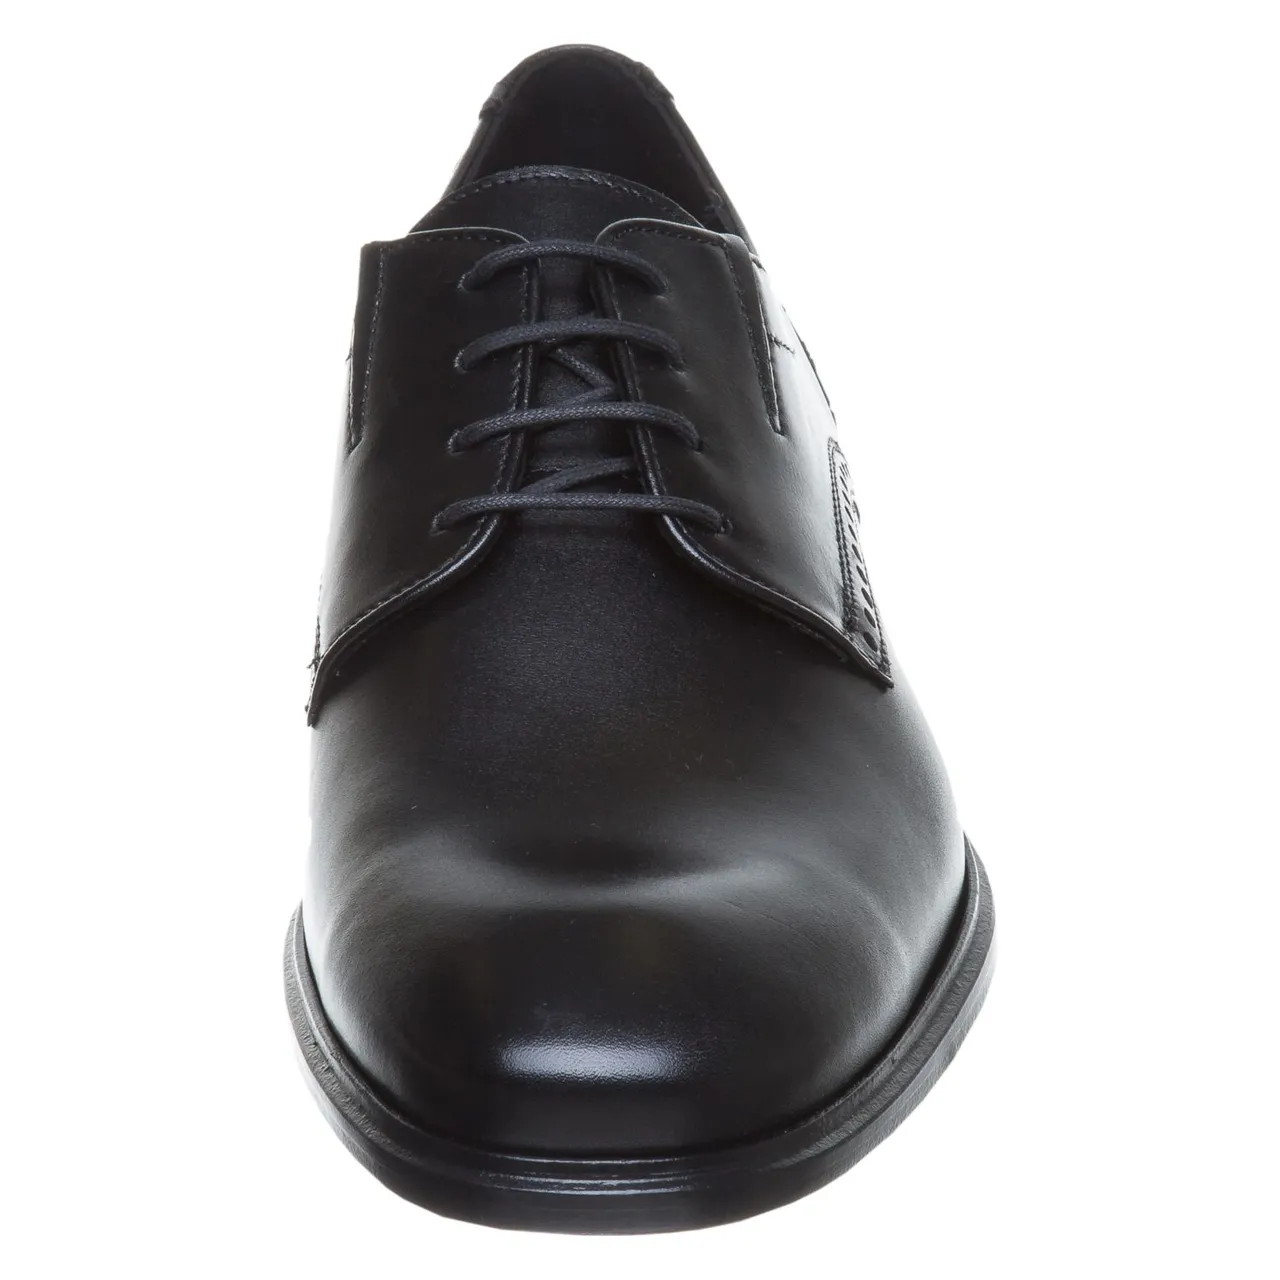 Business Schuhe schwarz KOOG